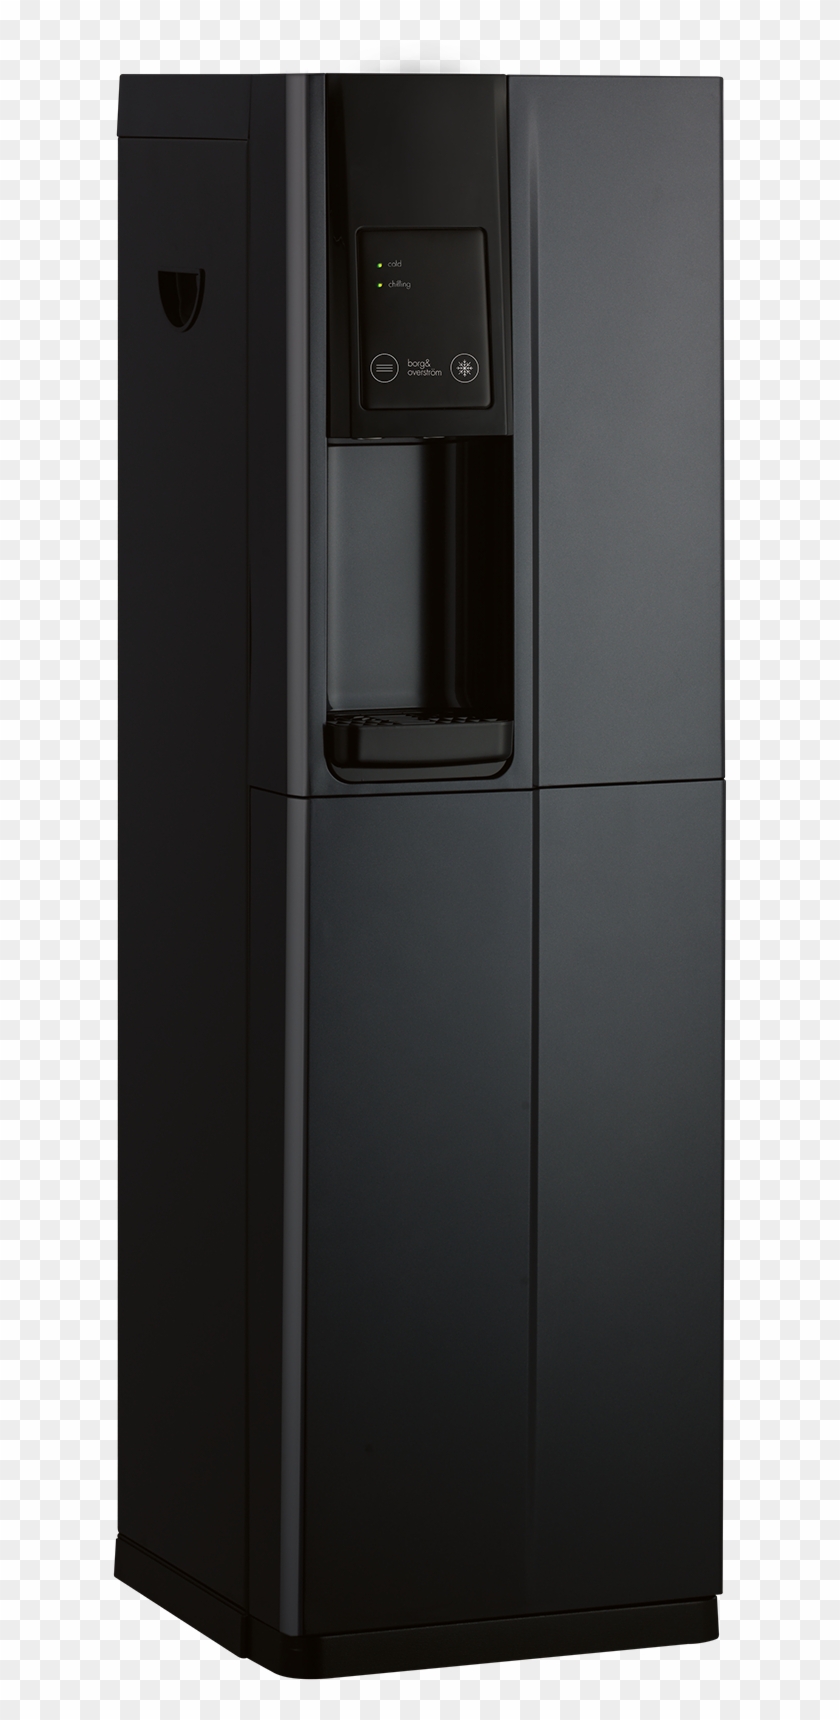 B2 Water Cooler - Refrigerator Clipart #4777725